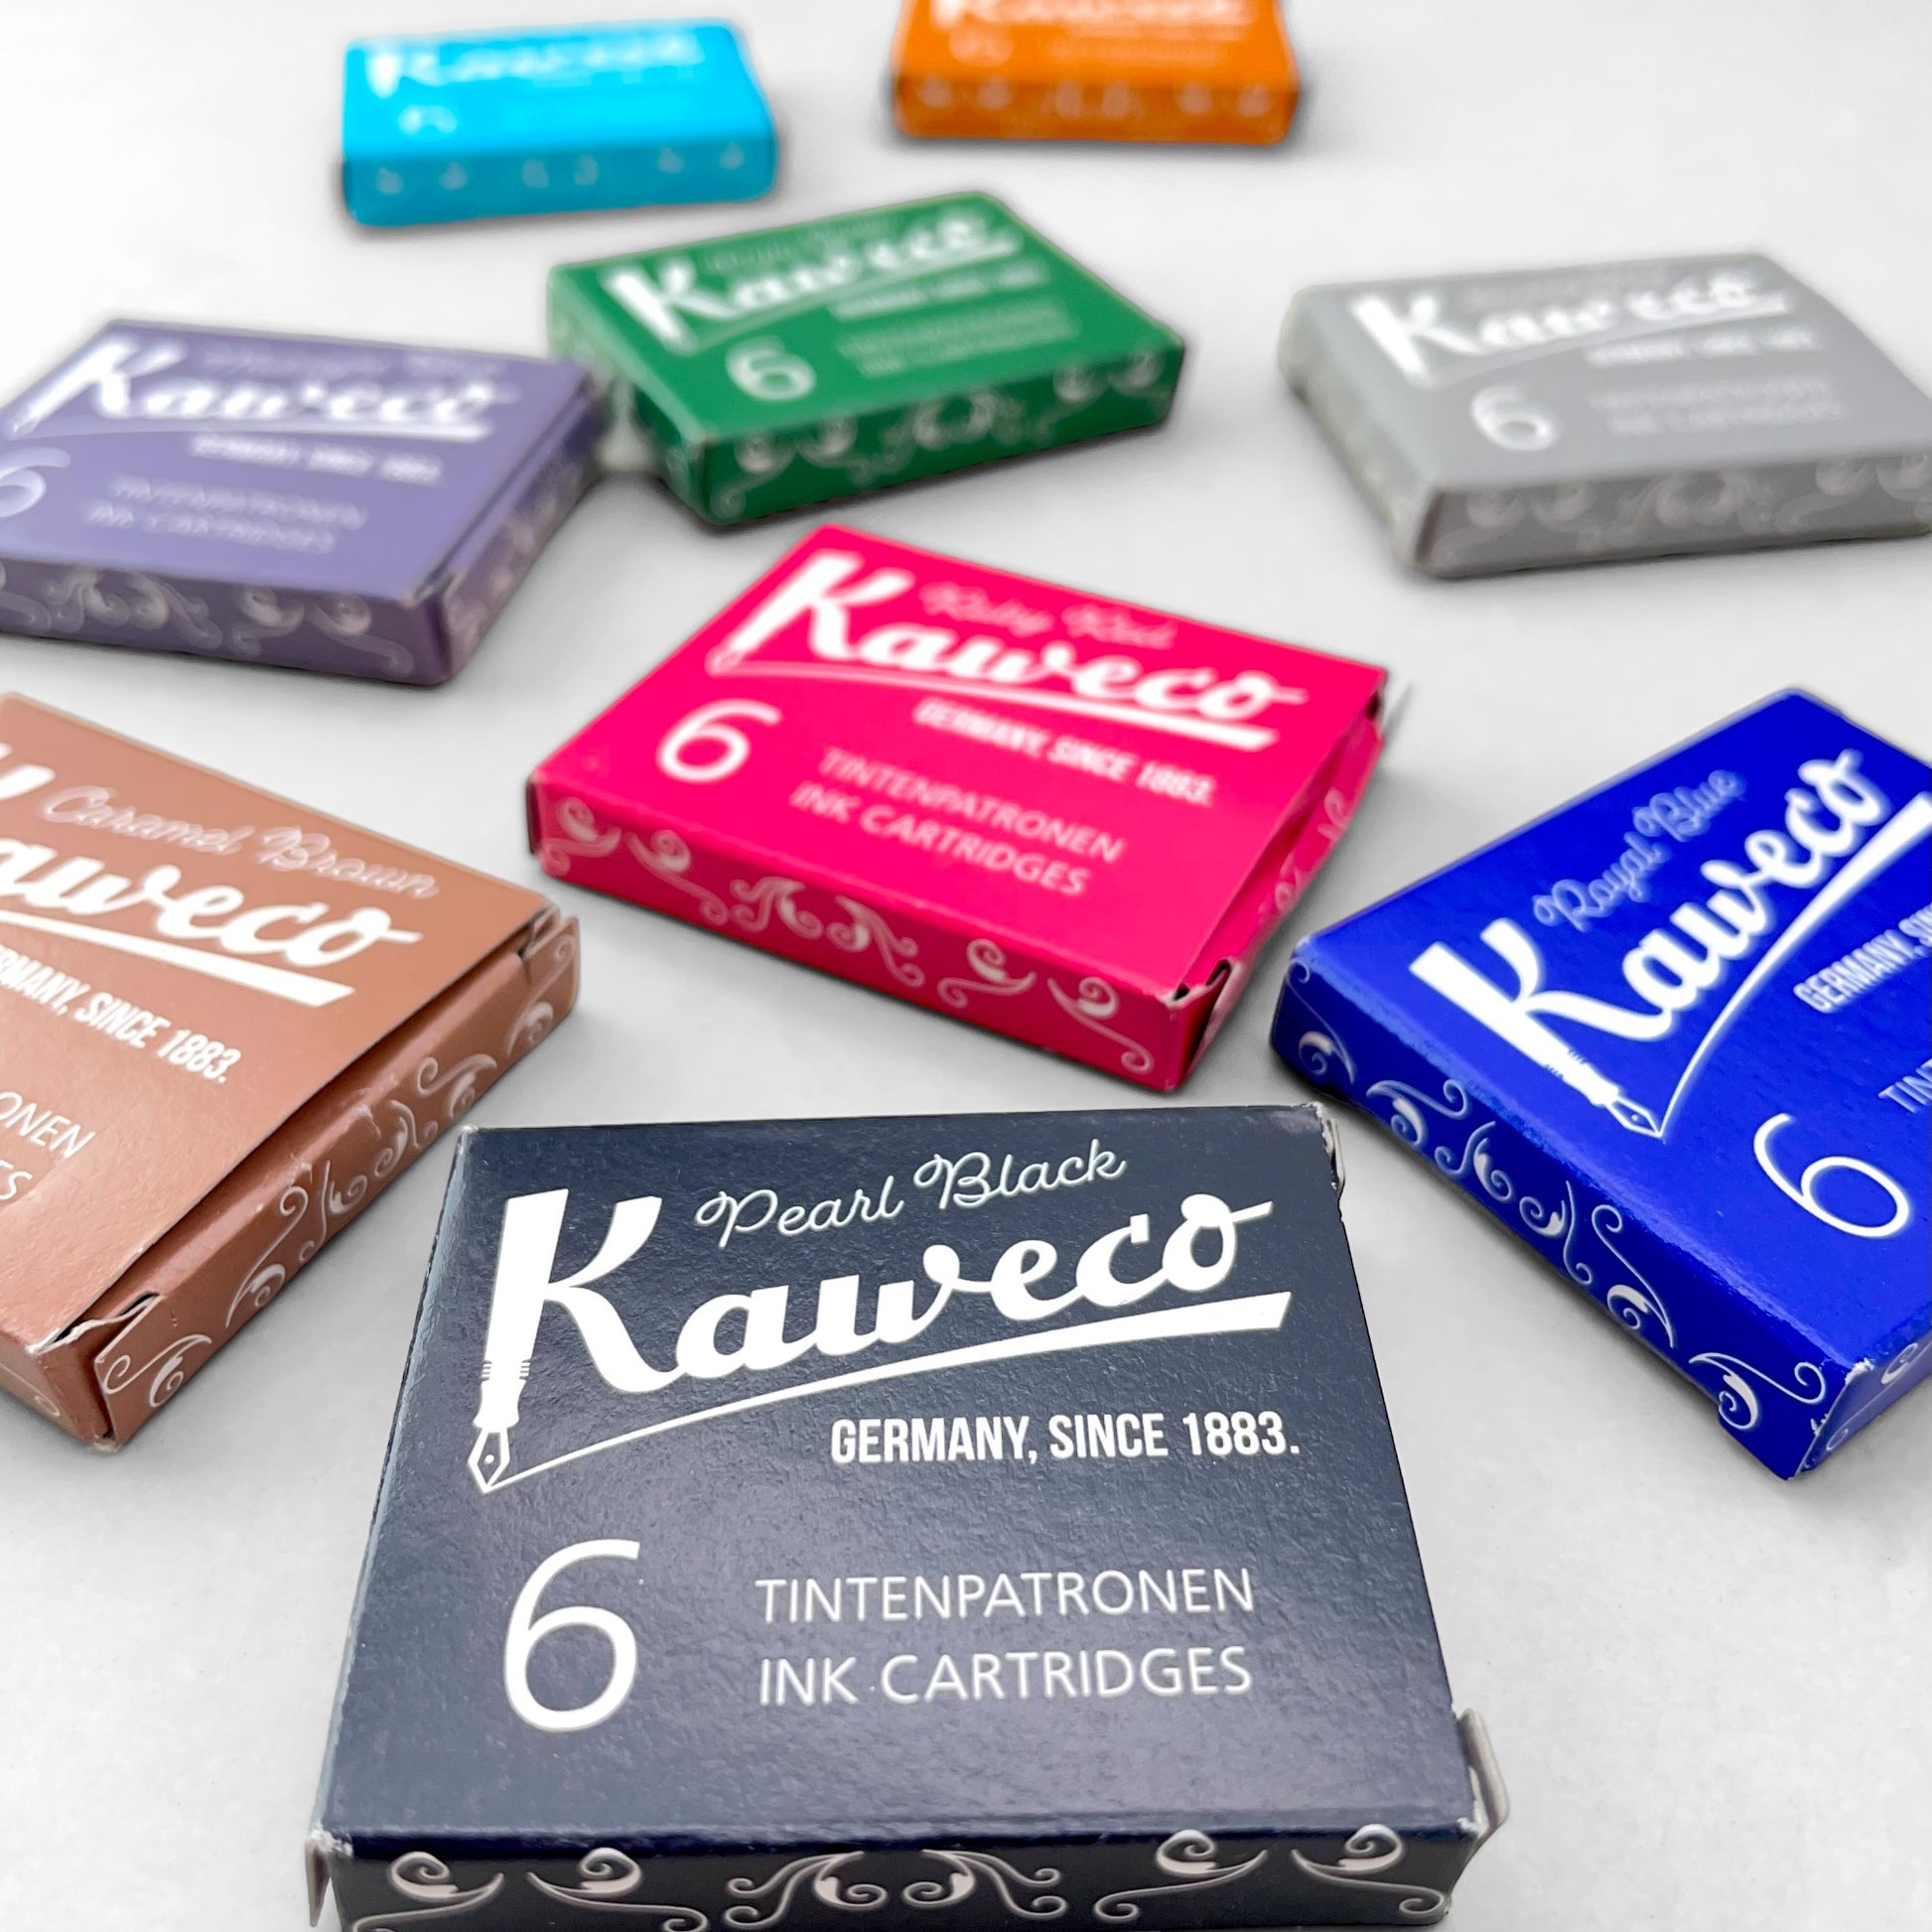 Box of 6 ink cartridges by Kaweco in sunrise orange colour